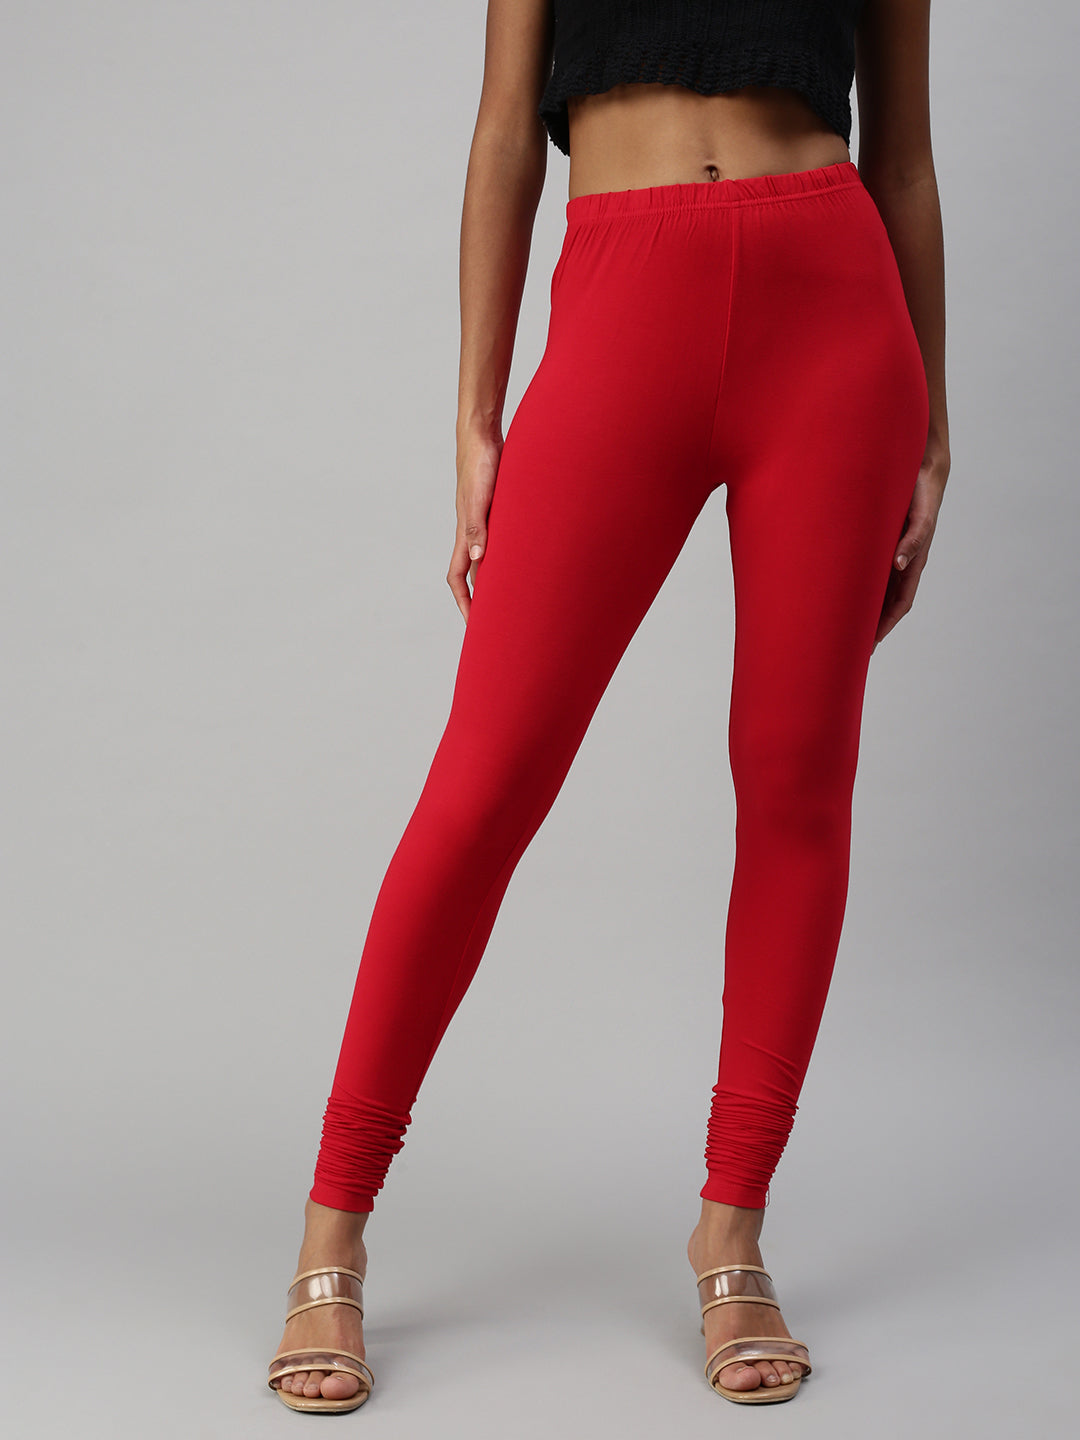 Buy prisma leggings red in India @ Limeroad